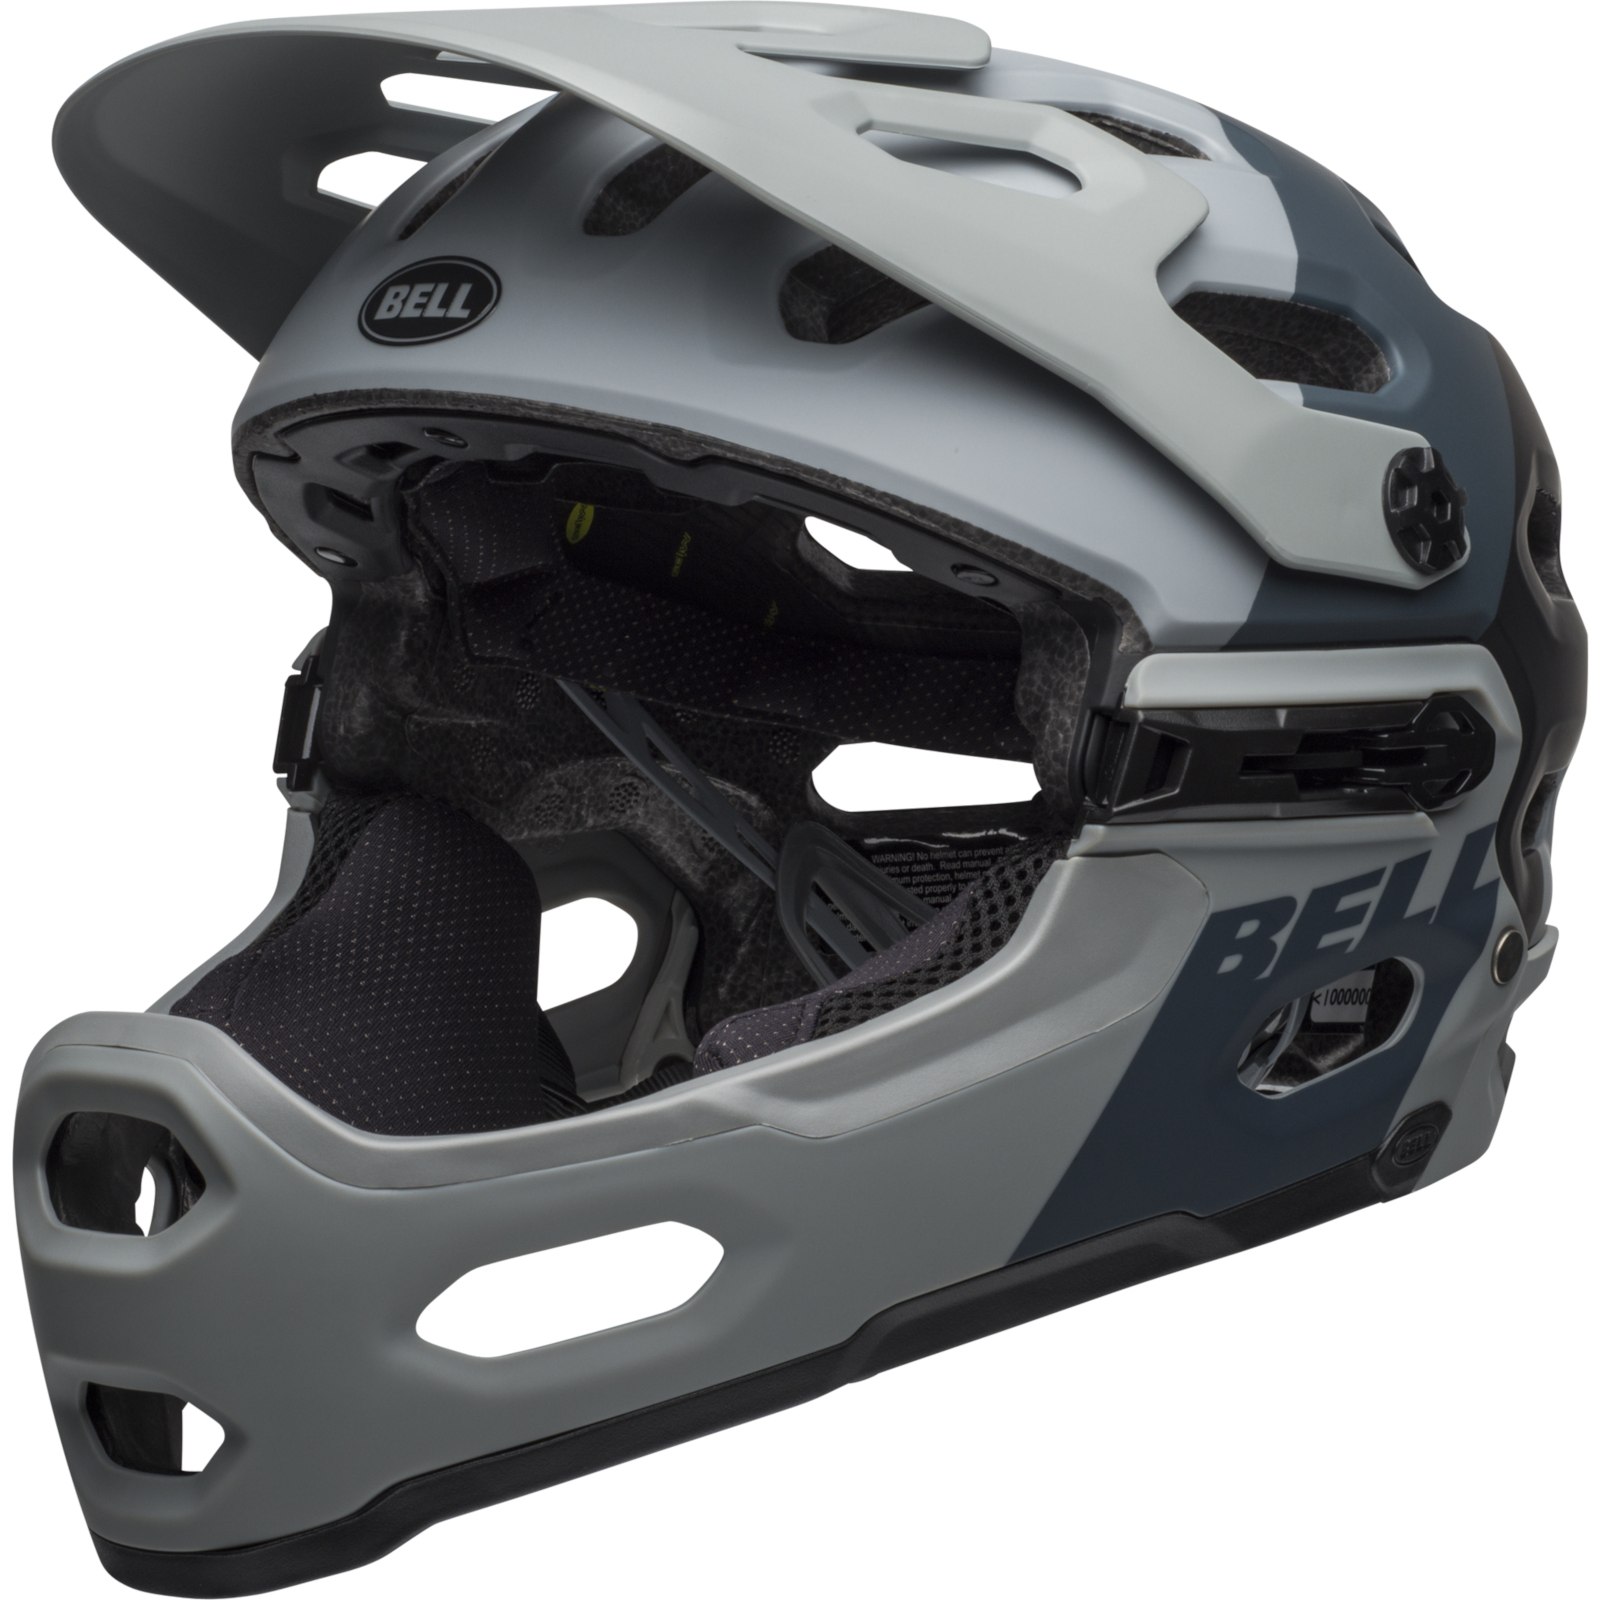 Picture of Bell Super 3R MIPS Helmet - downdraft matte gray/gunmetal